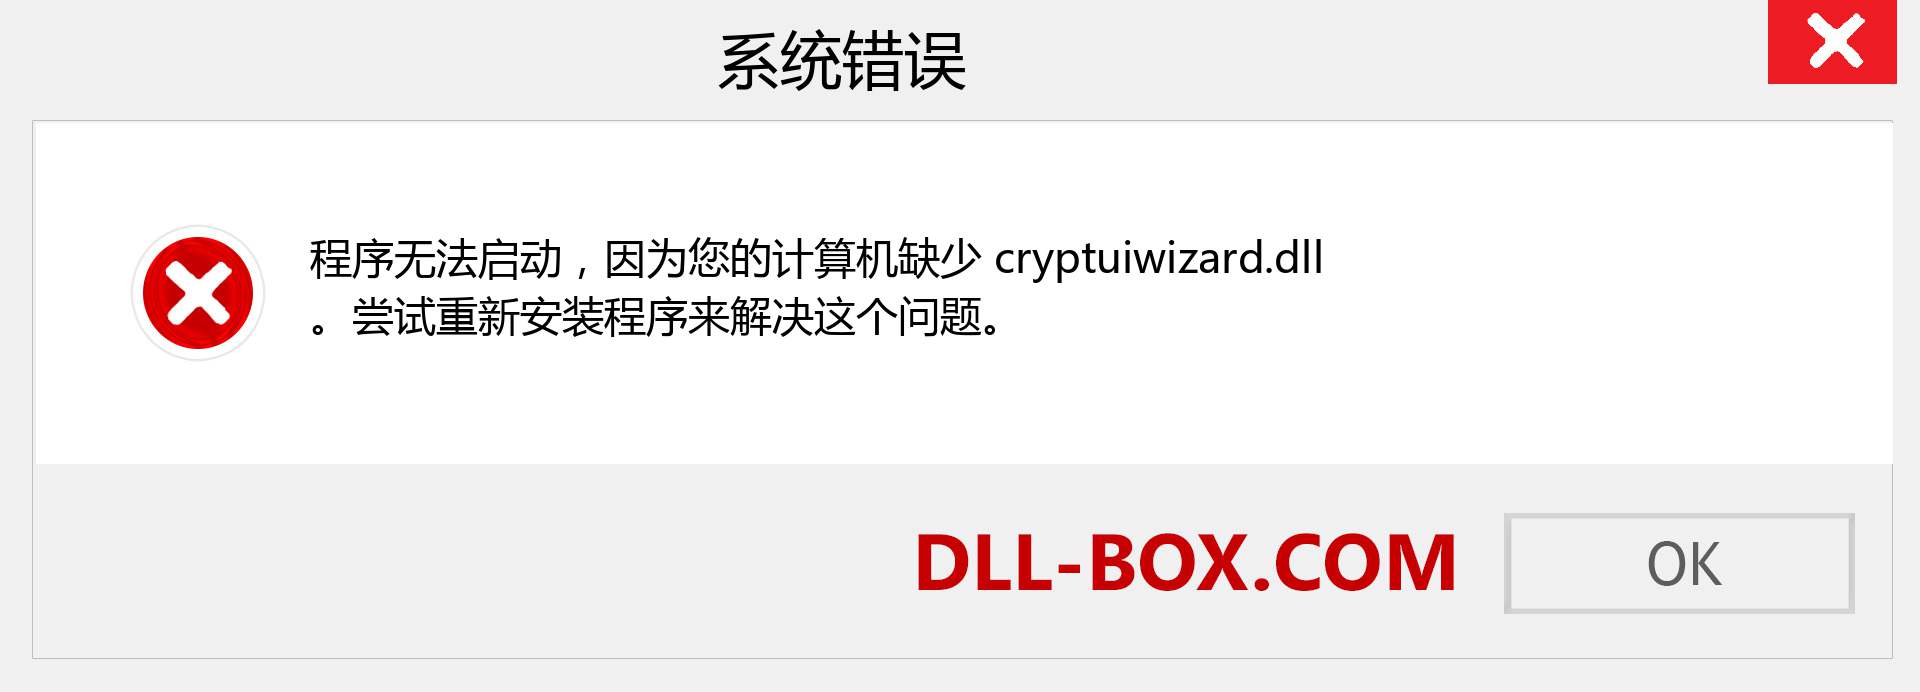 cryptuiwizard.dll 文件丢失？。 适用于 Windows 7、8、10 的下载 - 修复 Windows、照片、图像上的 cryptuiwizard dll 丢失错误